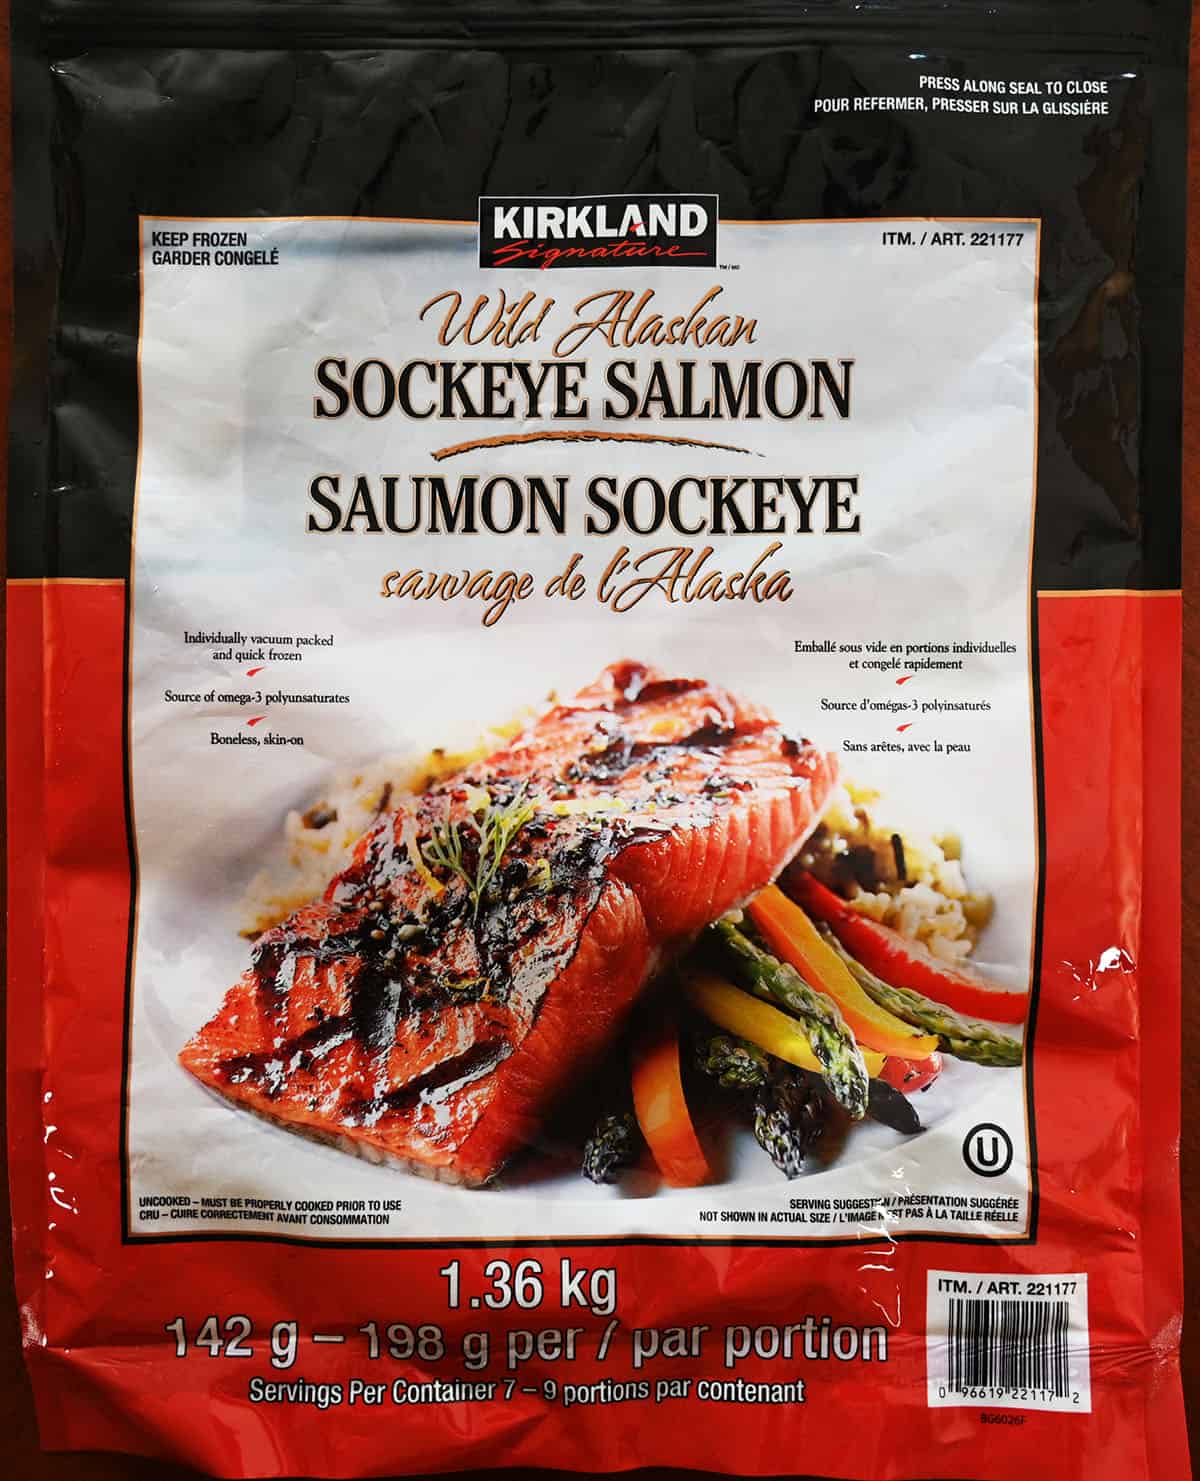 Costco Kirkland Signature Wild Alaskan Sockeye Salmon Review - Costcuisine